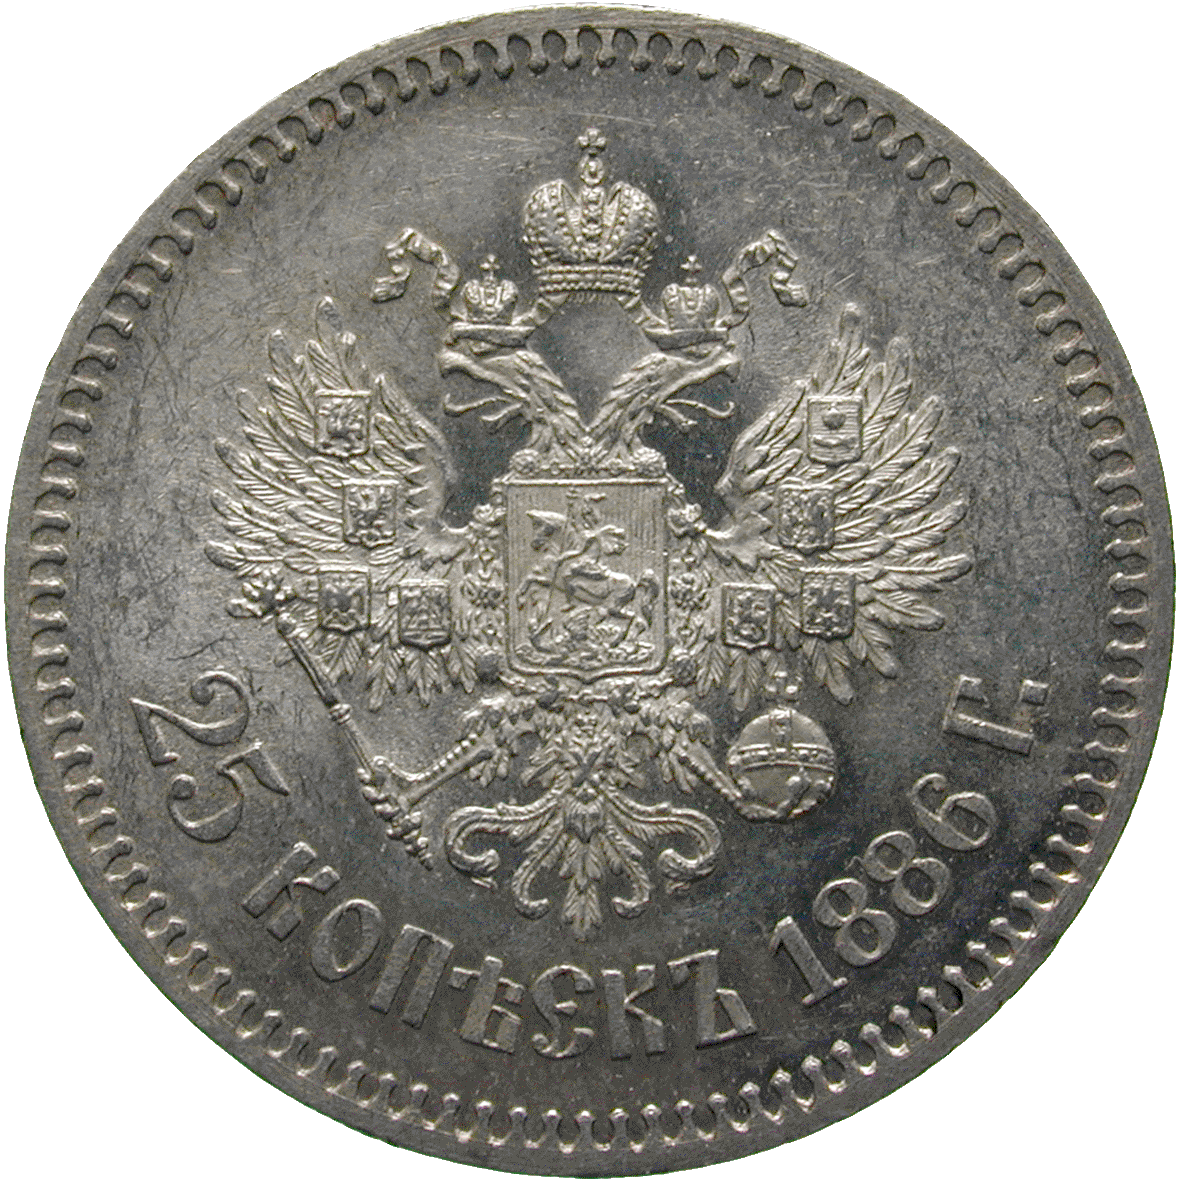 Zarenreich Russland, Alexander III., 25 Kopeken 1886 (reverse)